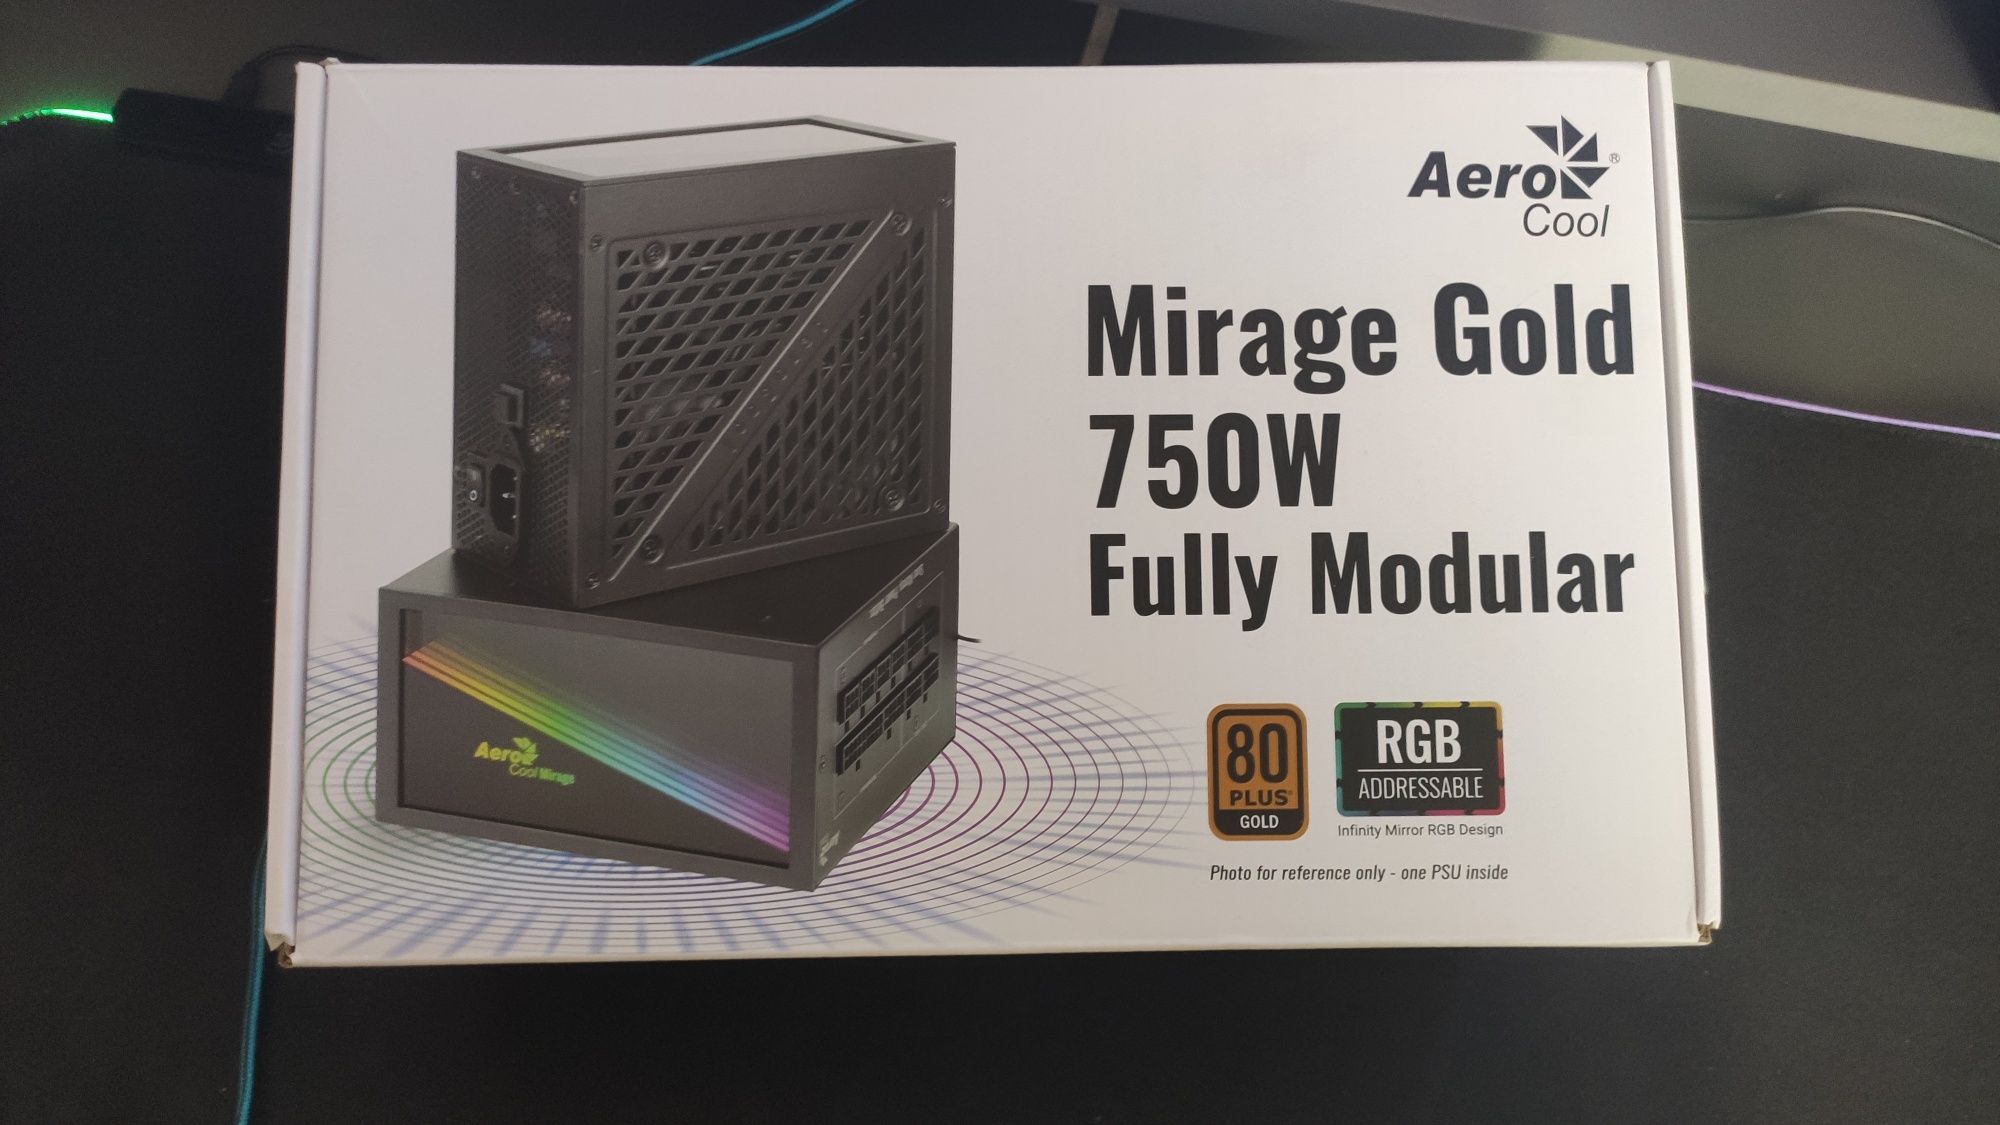 Mirage Gold 750W Fully Modular - AeroCool